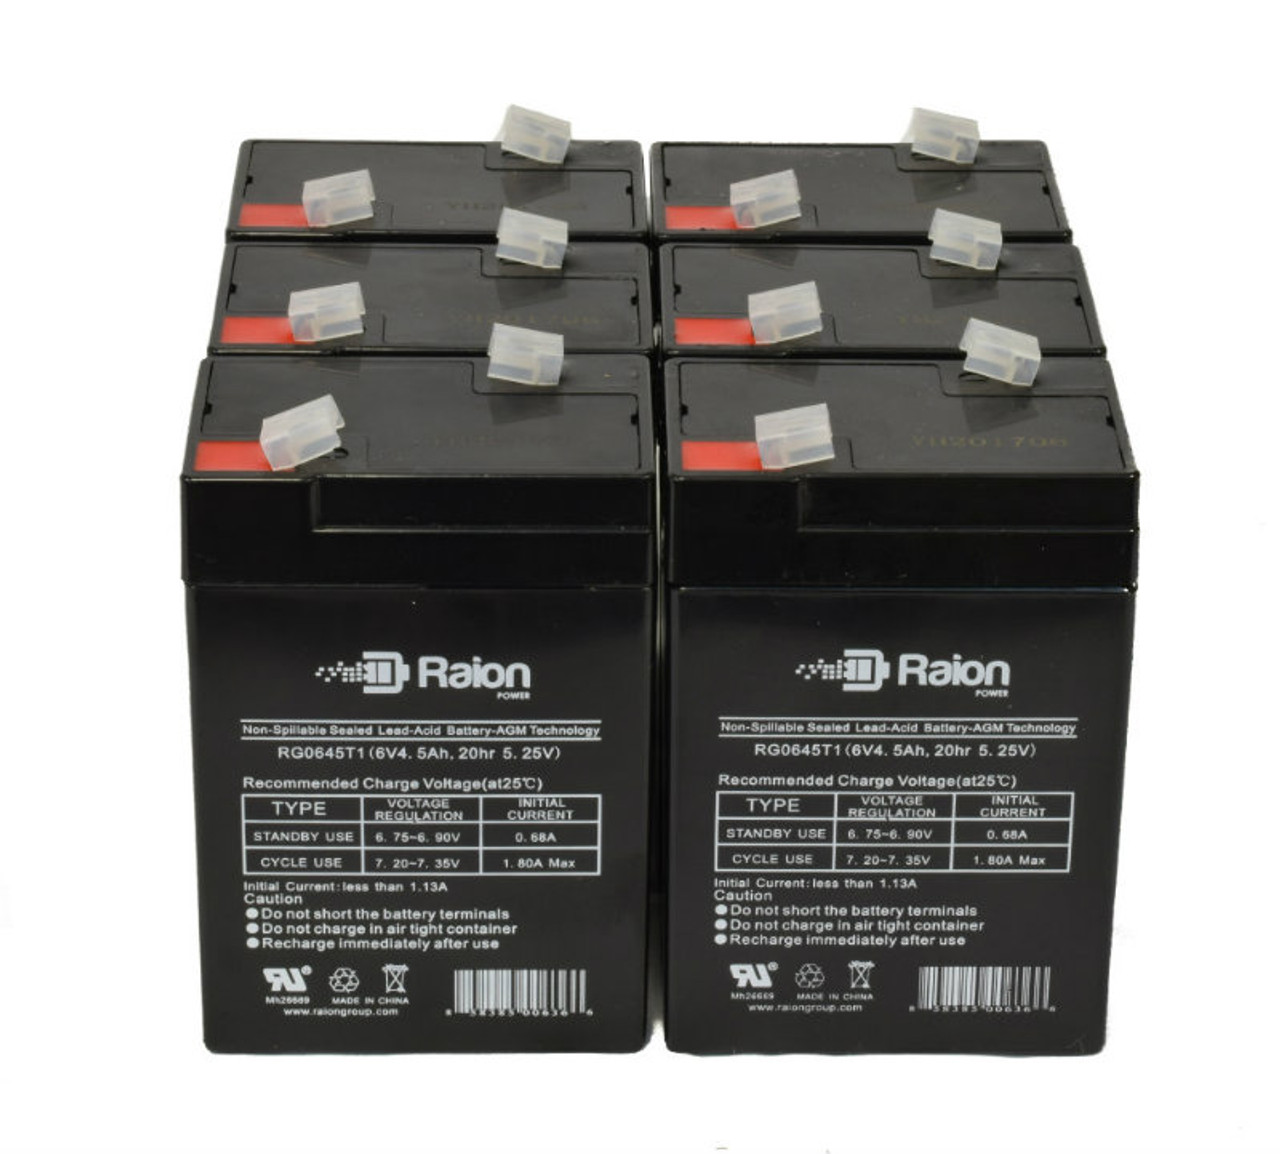 Raion Power 6 Volt 4.5Ah RG0645T1 Replacement Battery for Wangpin 3FM5 - 6 Pack